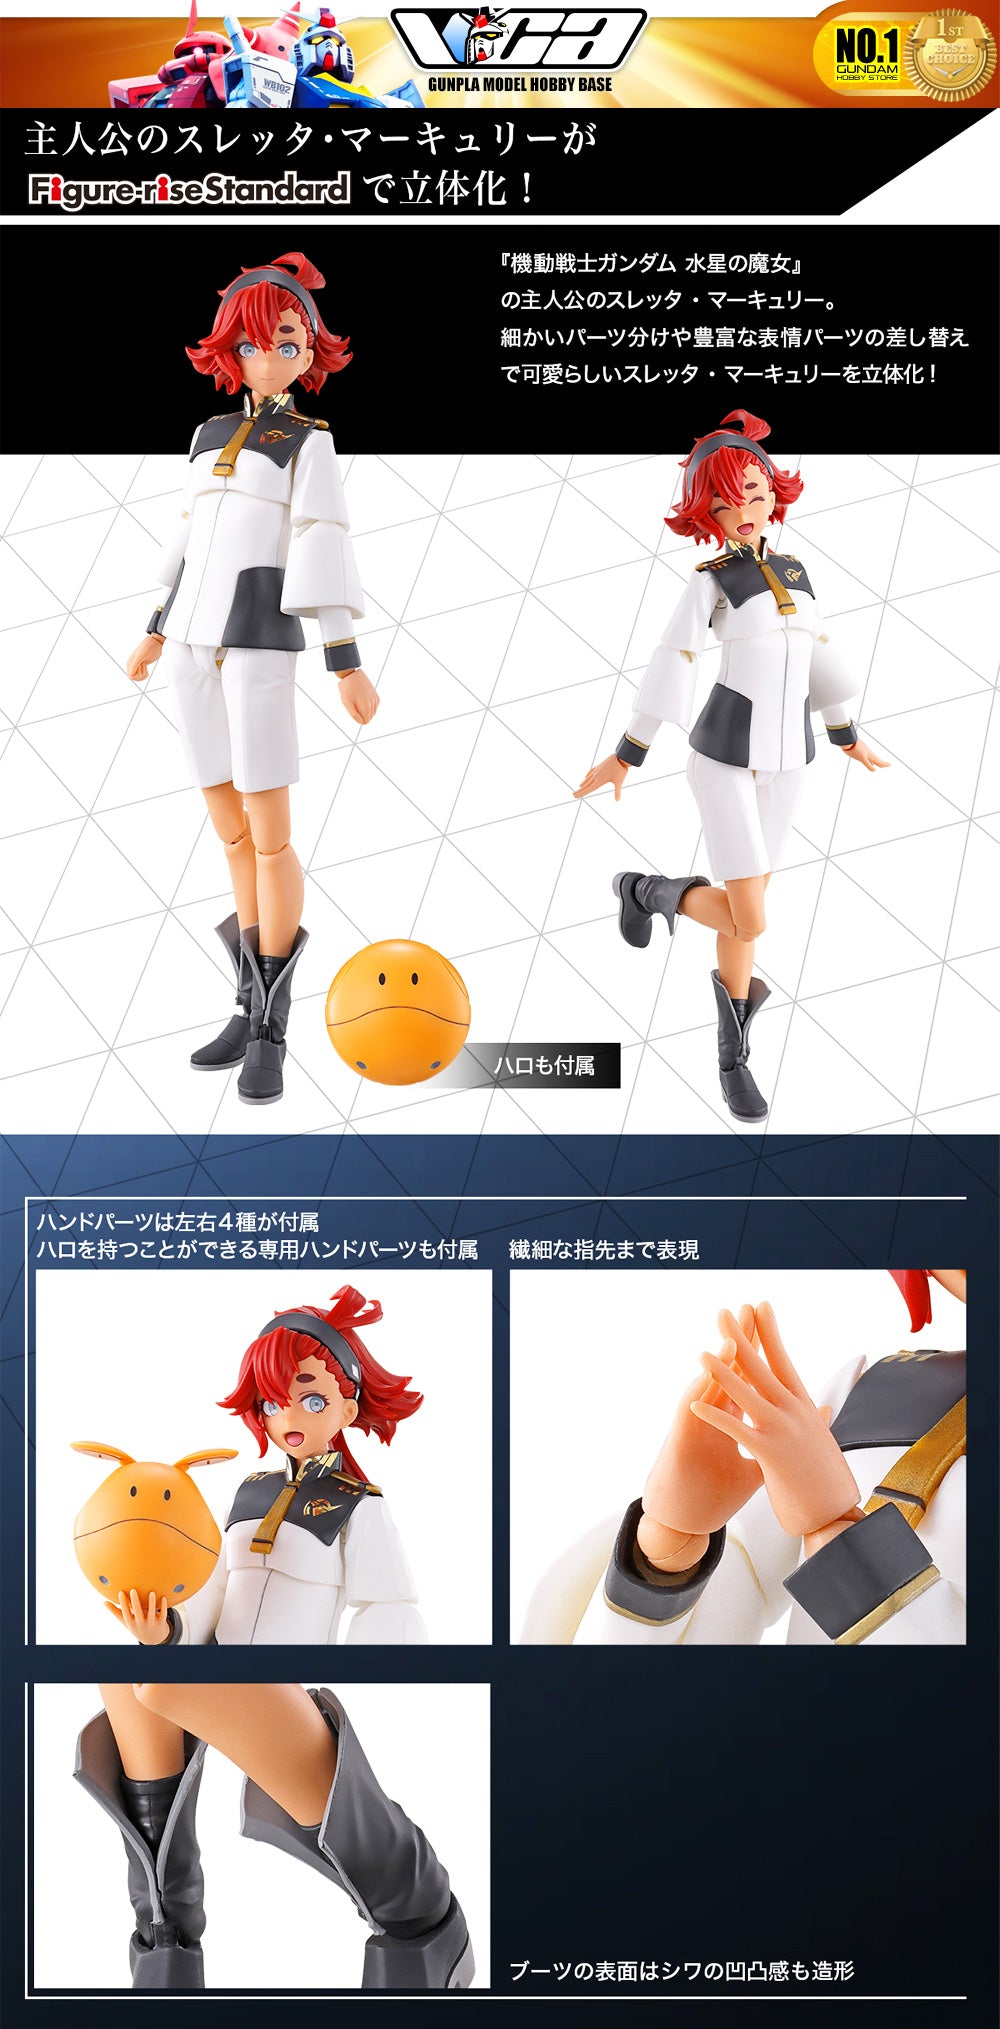 Bandai Figure-Rise Standard Suletta Mercury 女孩角色塑料模型可动玩具 VCA 高达新加坡